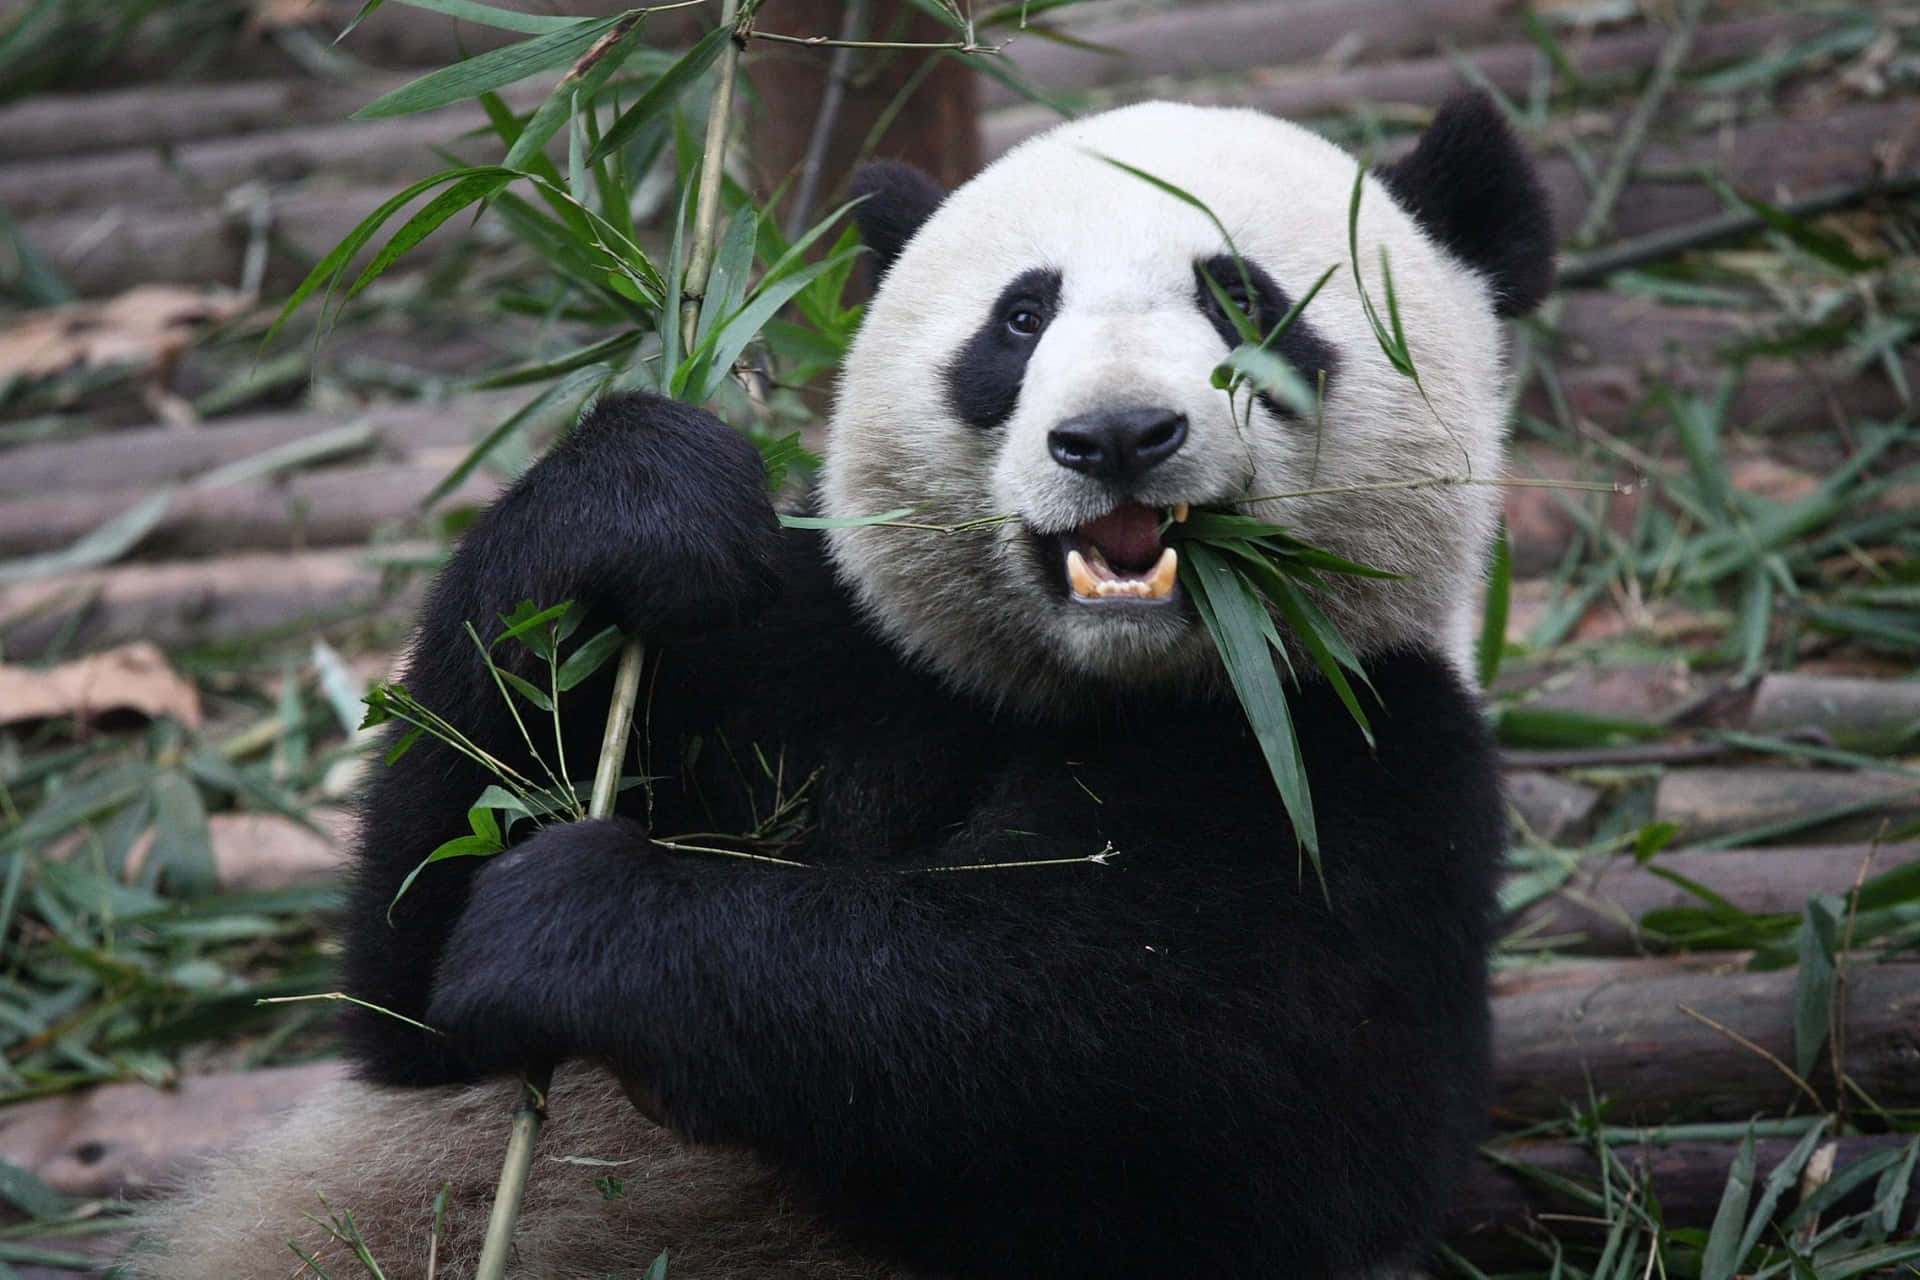 Cute panda cub curiously observing its surroundings